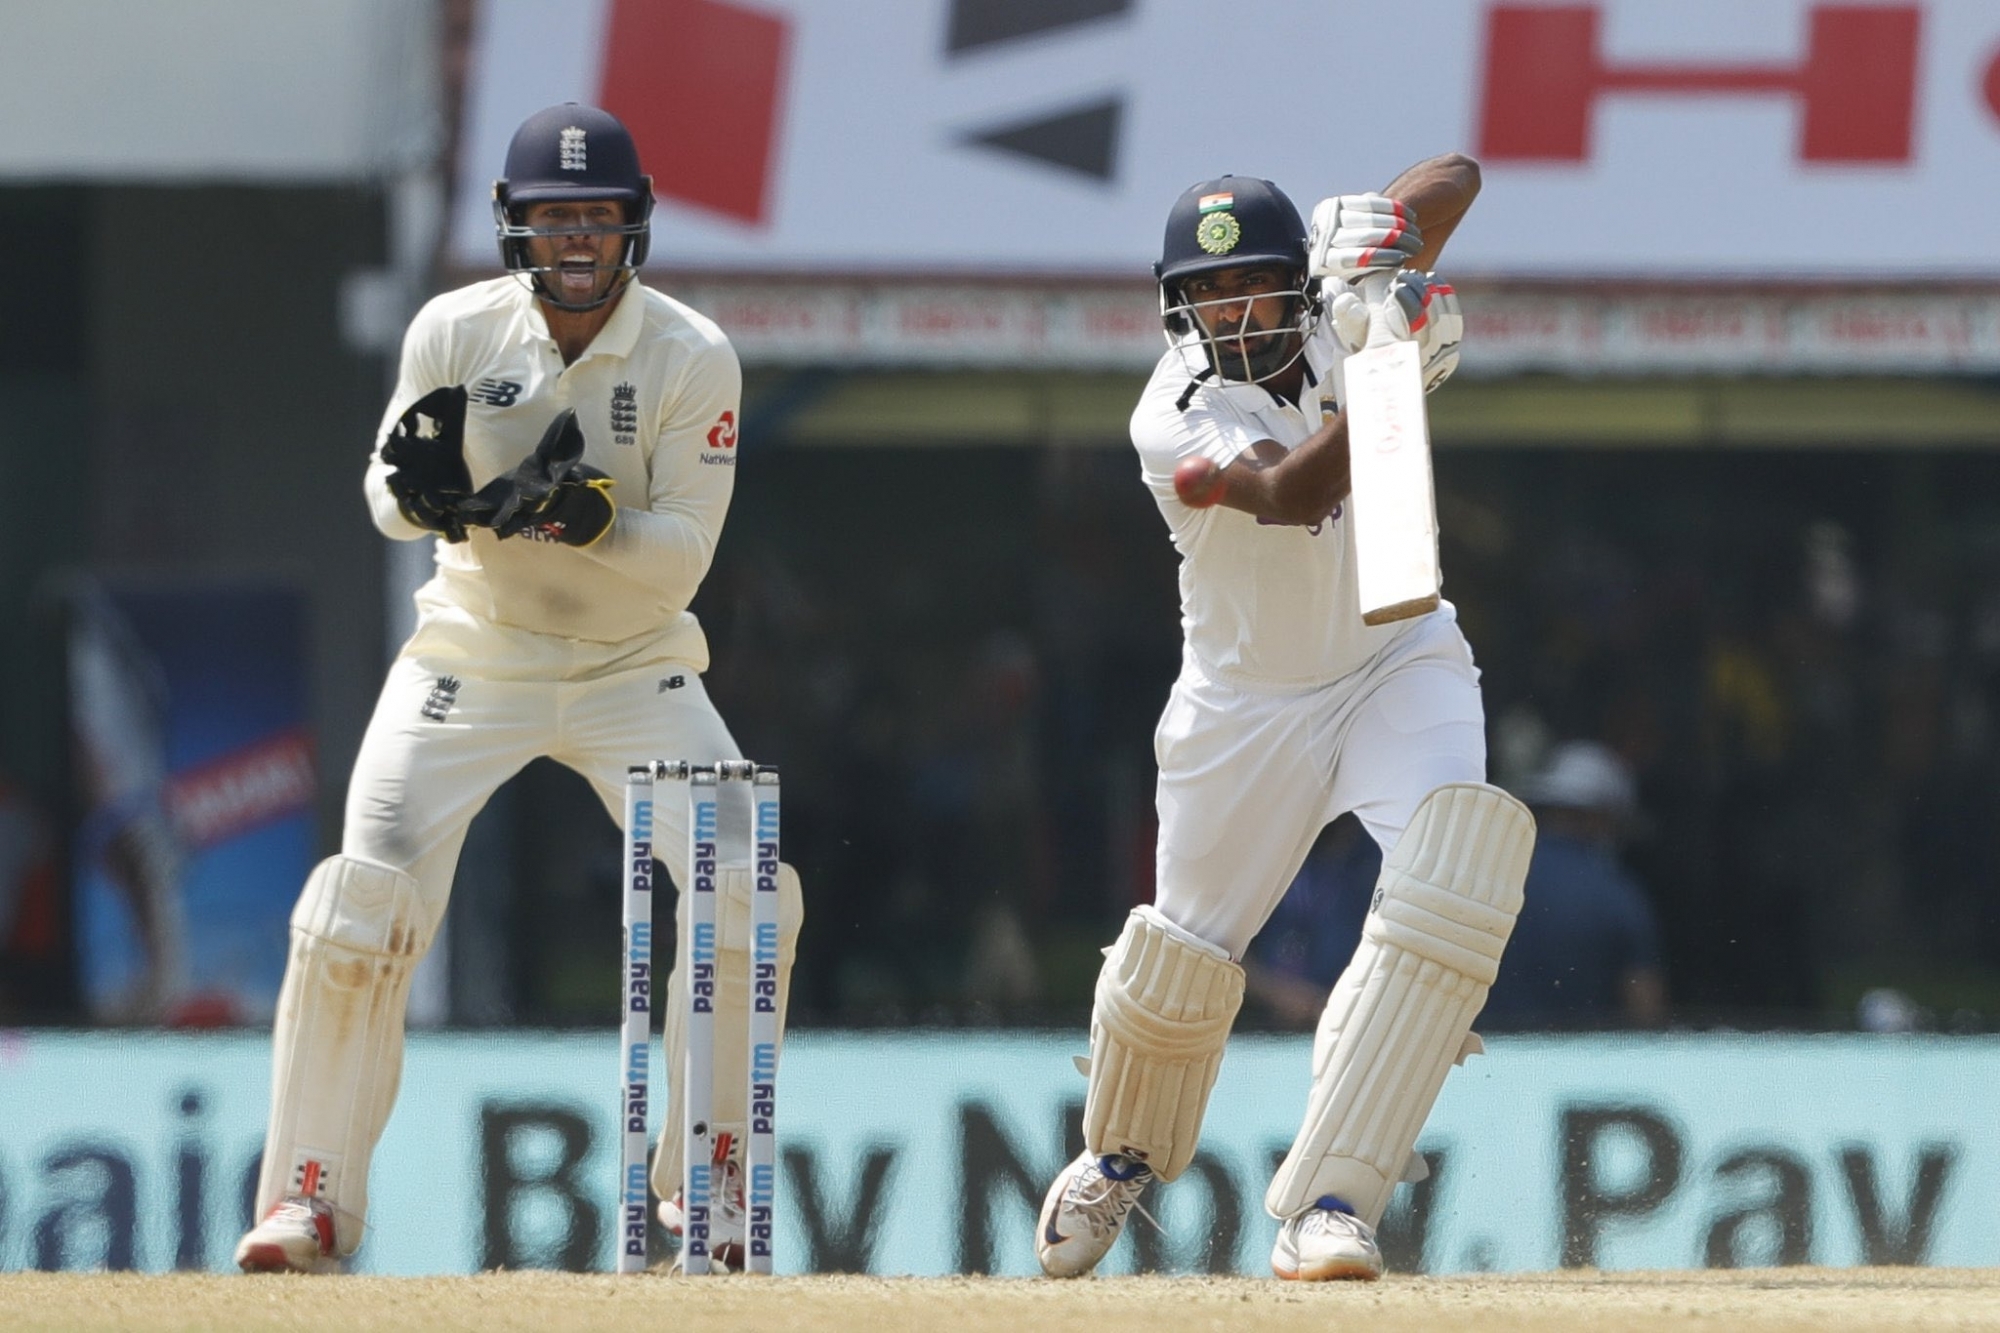 Practiced batting at home during COVID-19 lockdown, says Ravichandran Ashwin